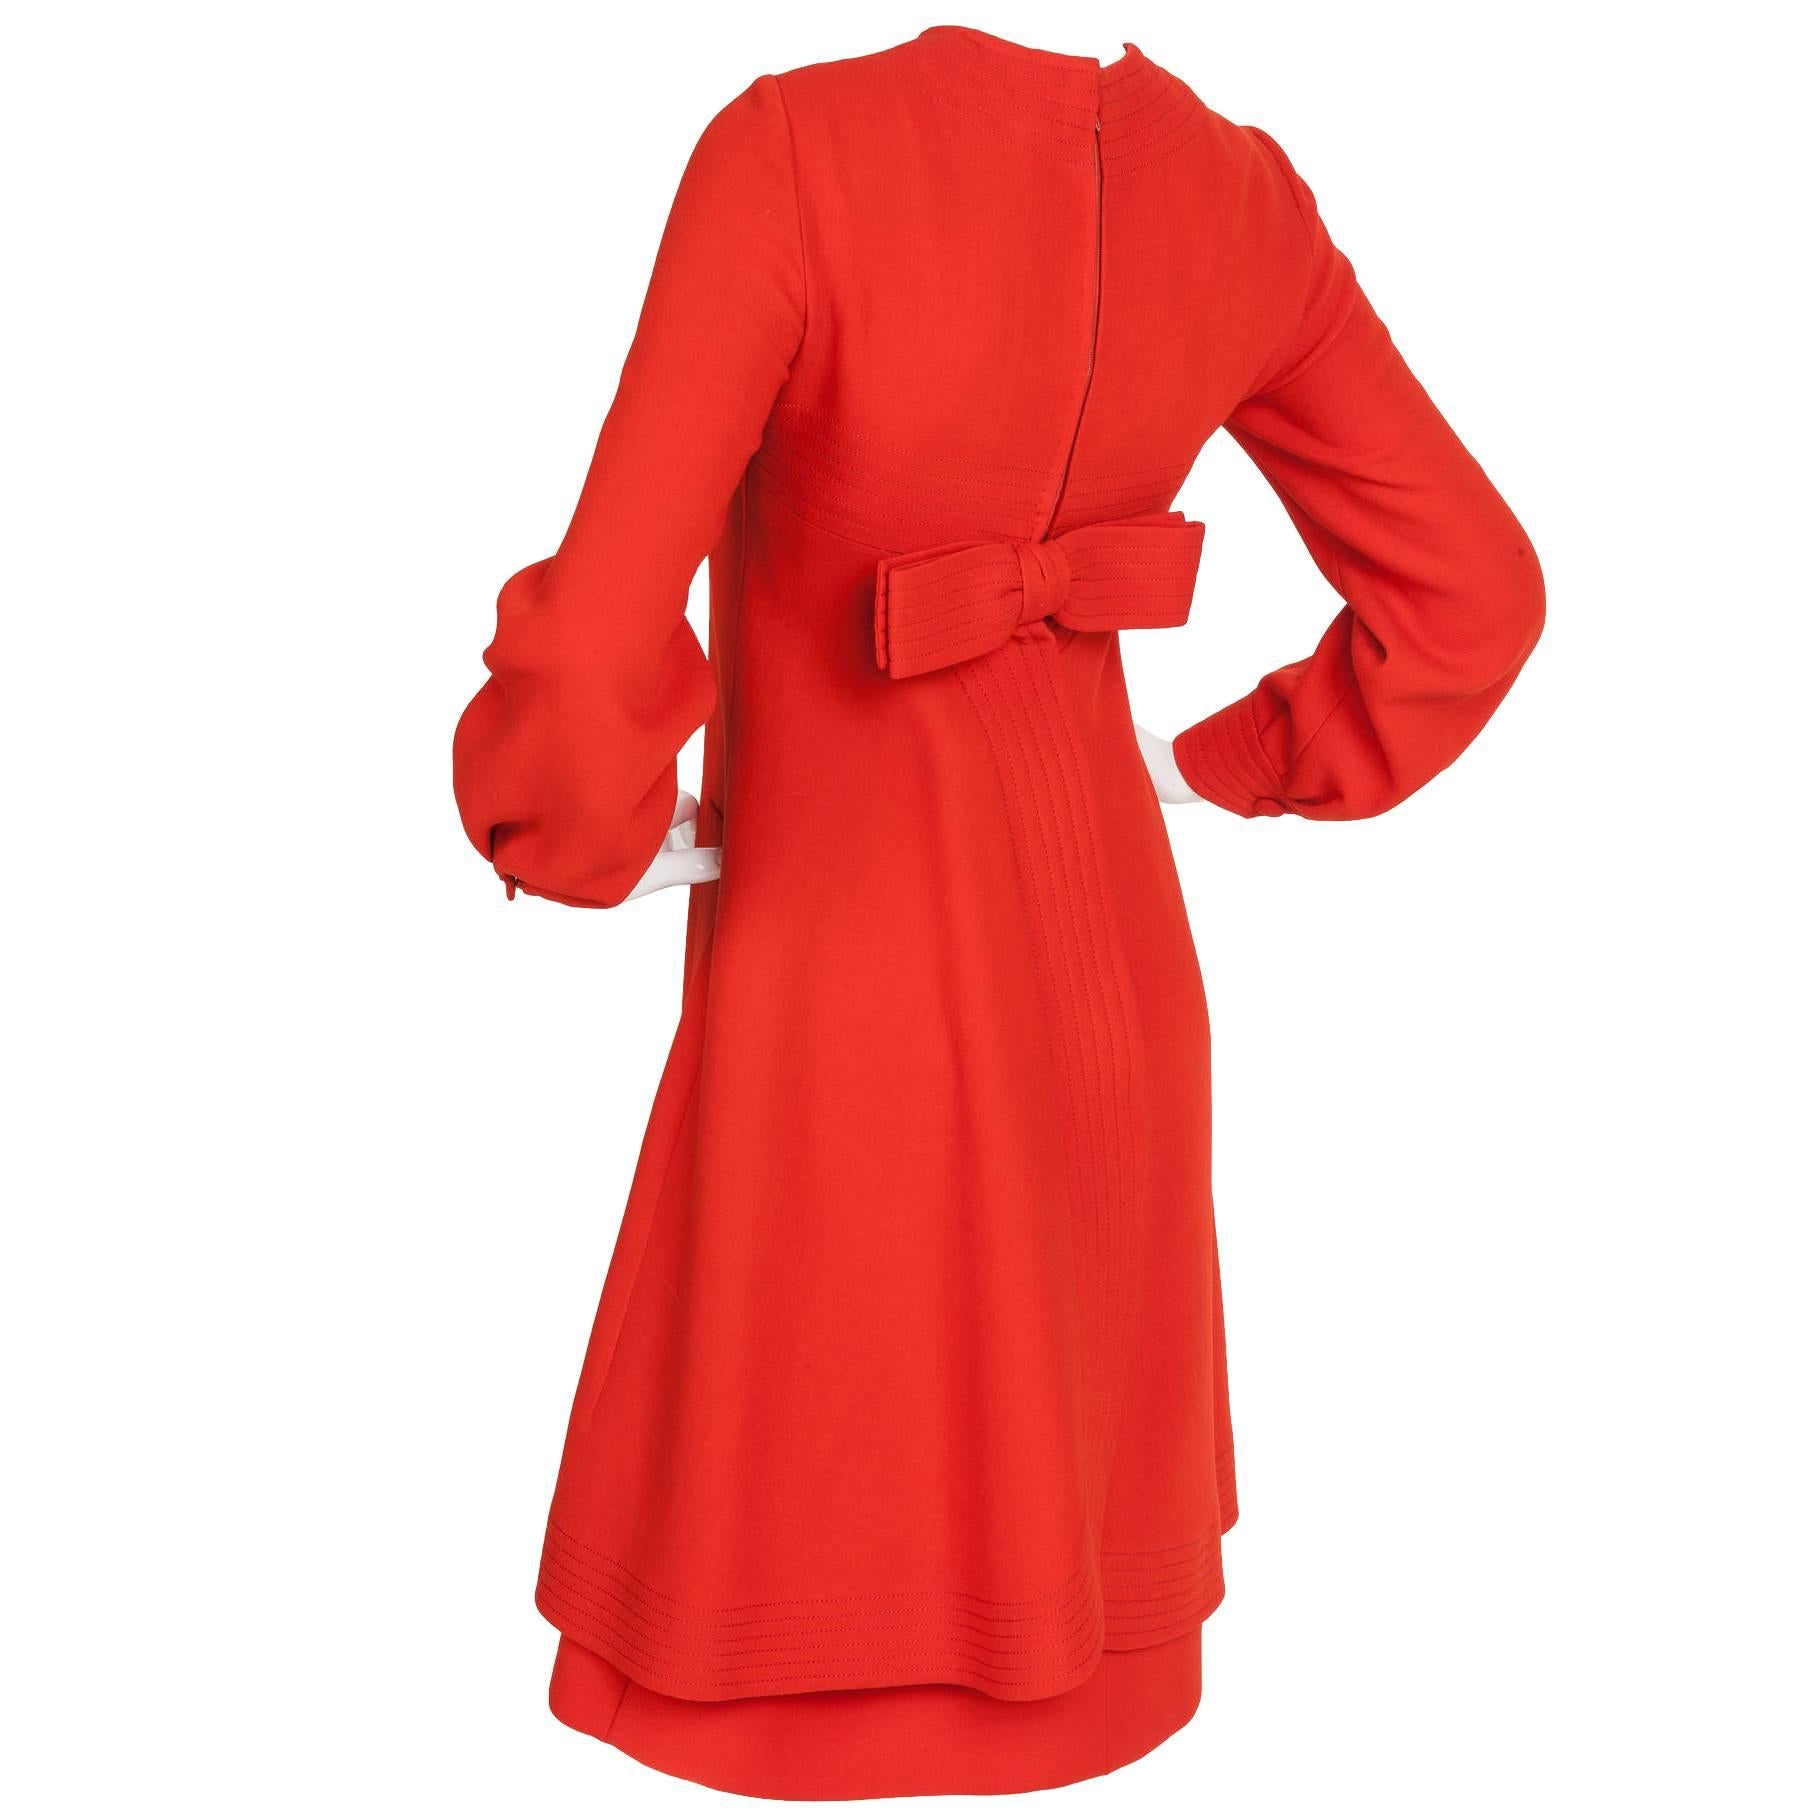 Pierre Cardin Red Wool Dress w/Channel Stitched Design Motif ca. 1970